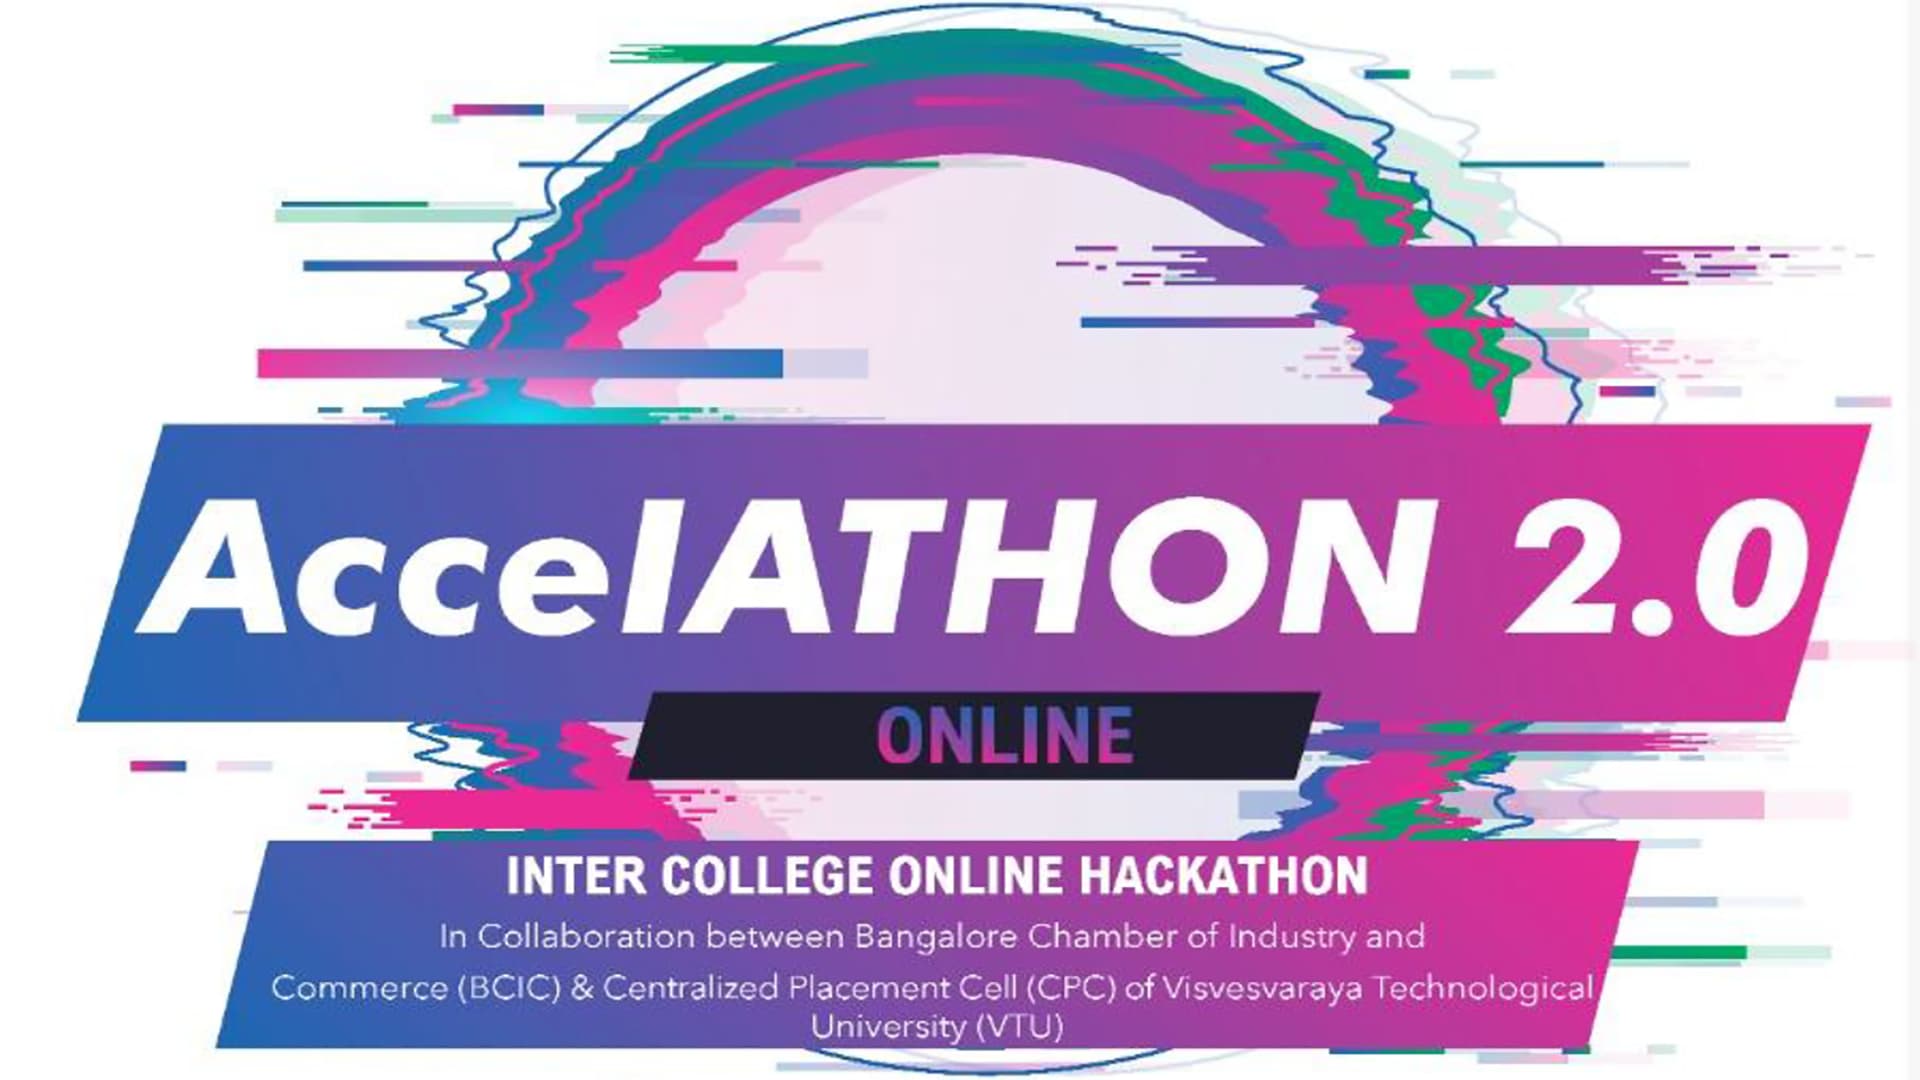 VTU Online Hackathon 2020-AccelATHON 2.0